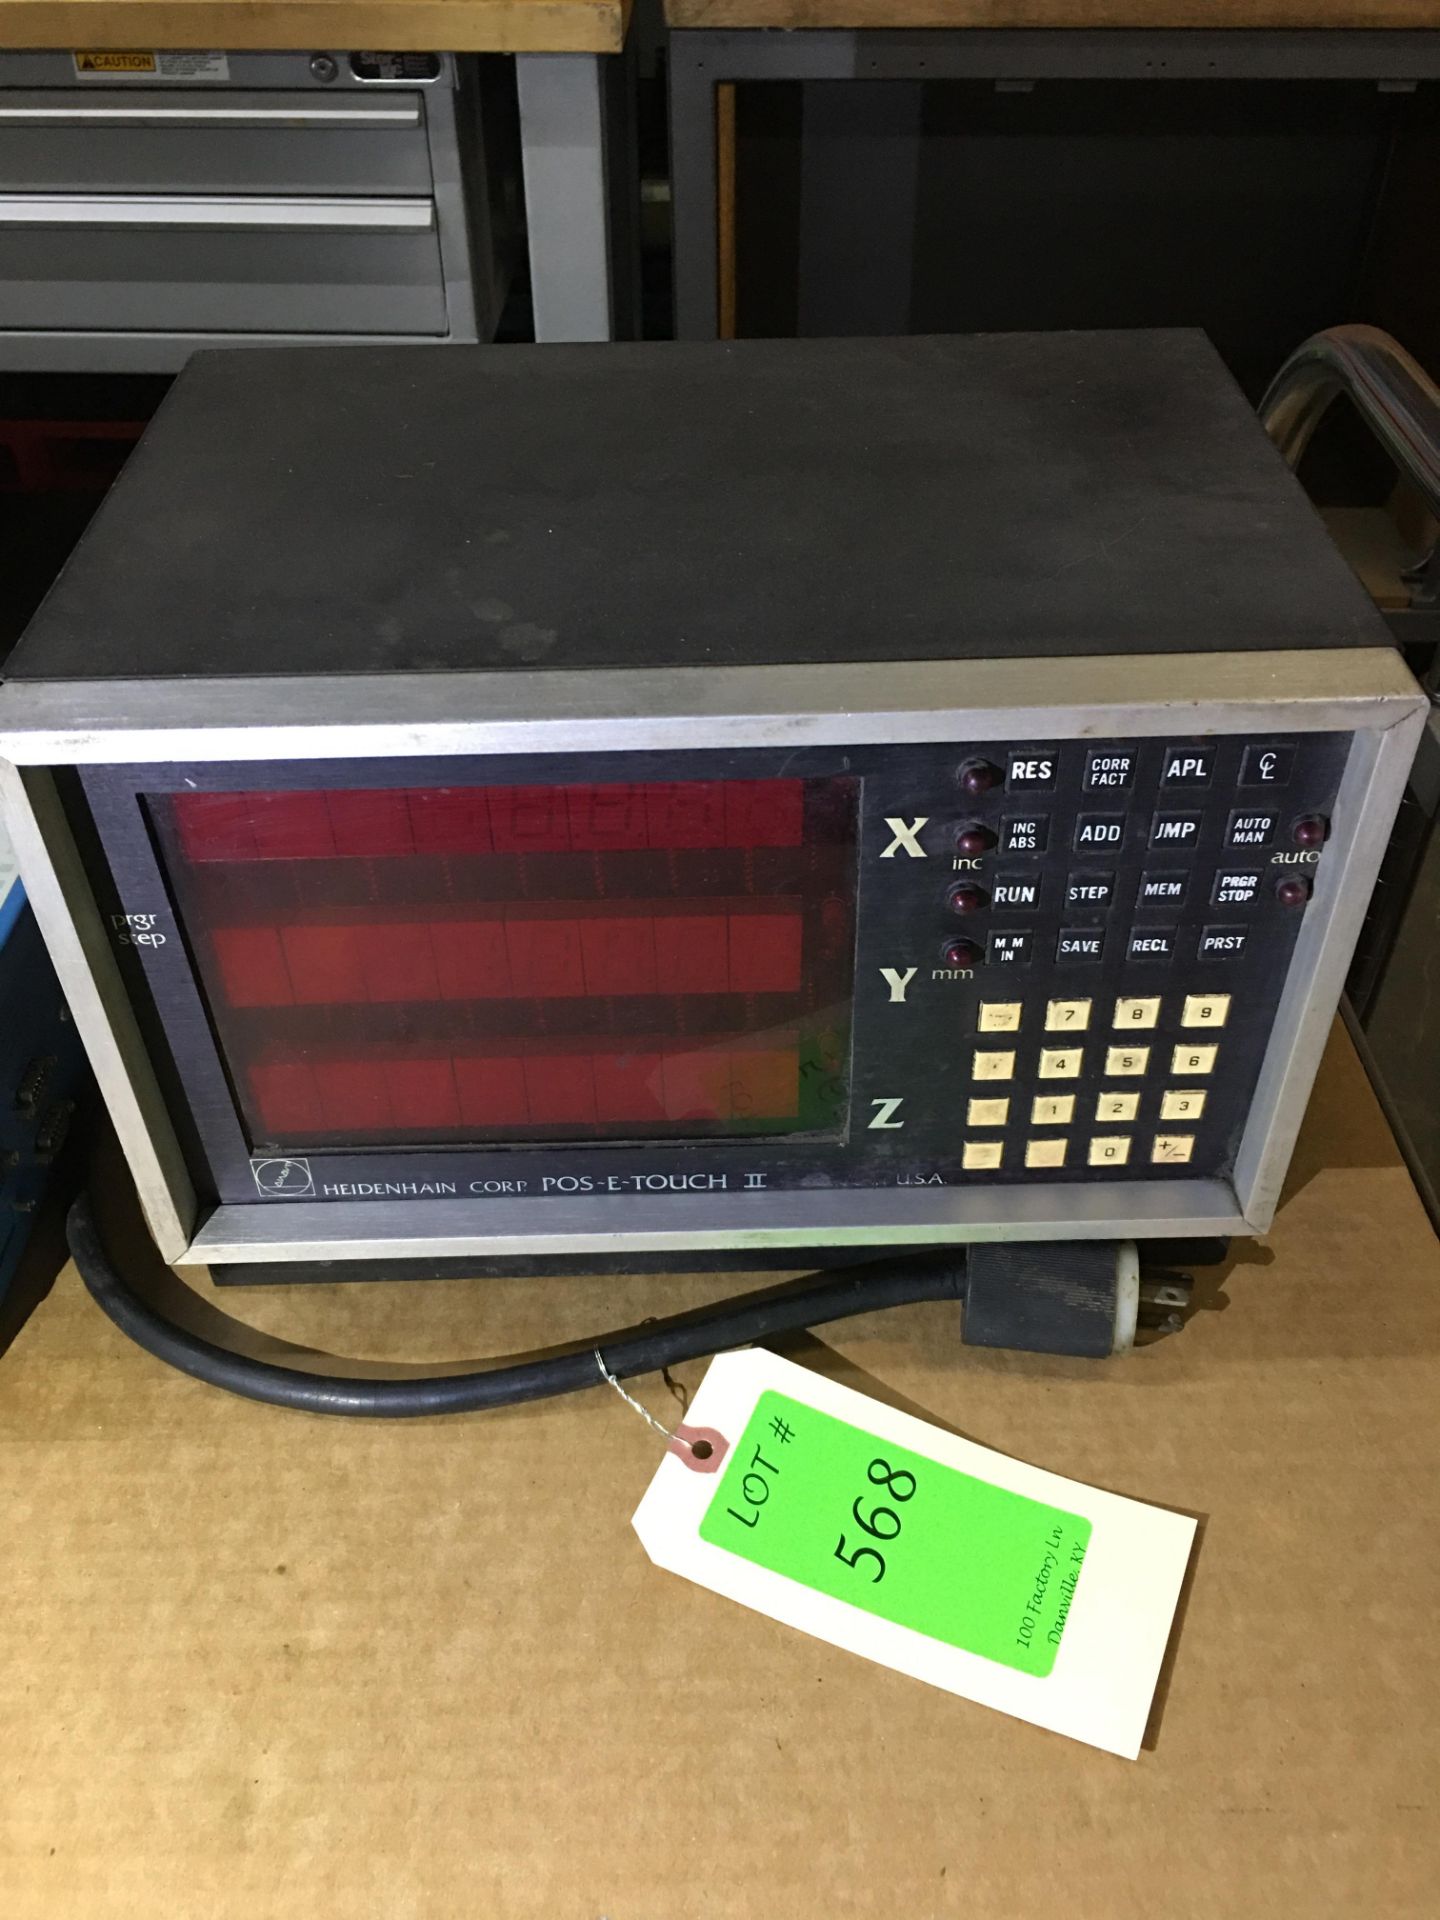 Heidenhain POS-E-TOUCH II Control Measuring System